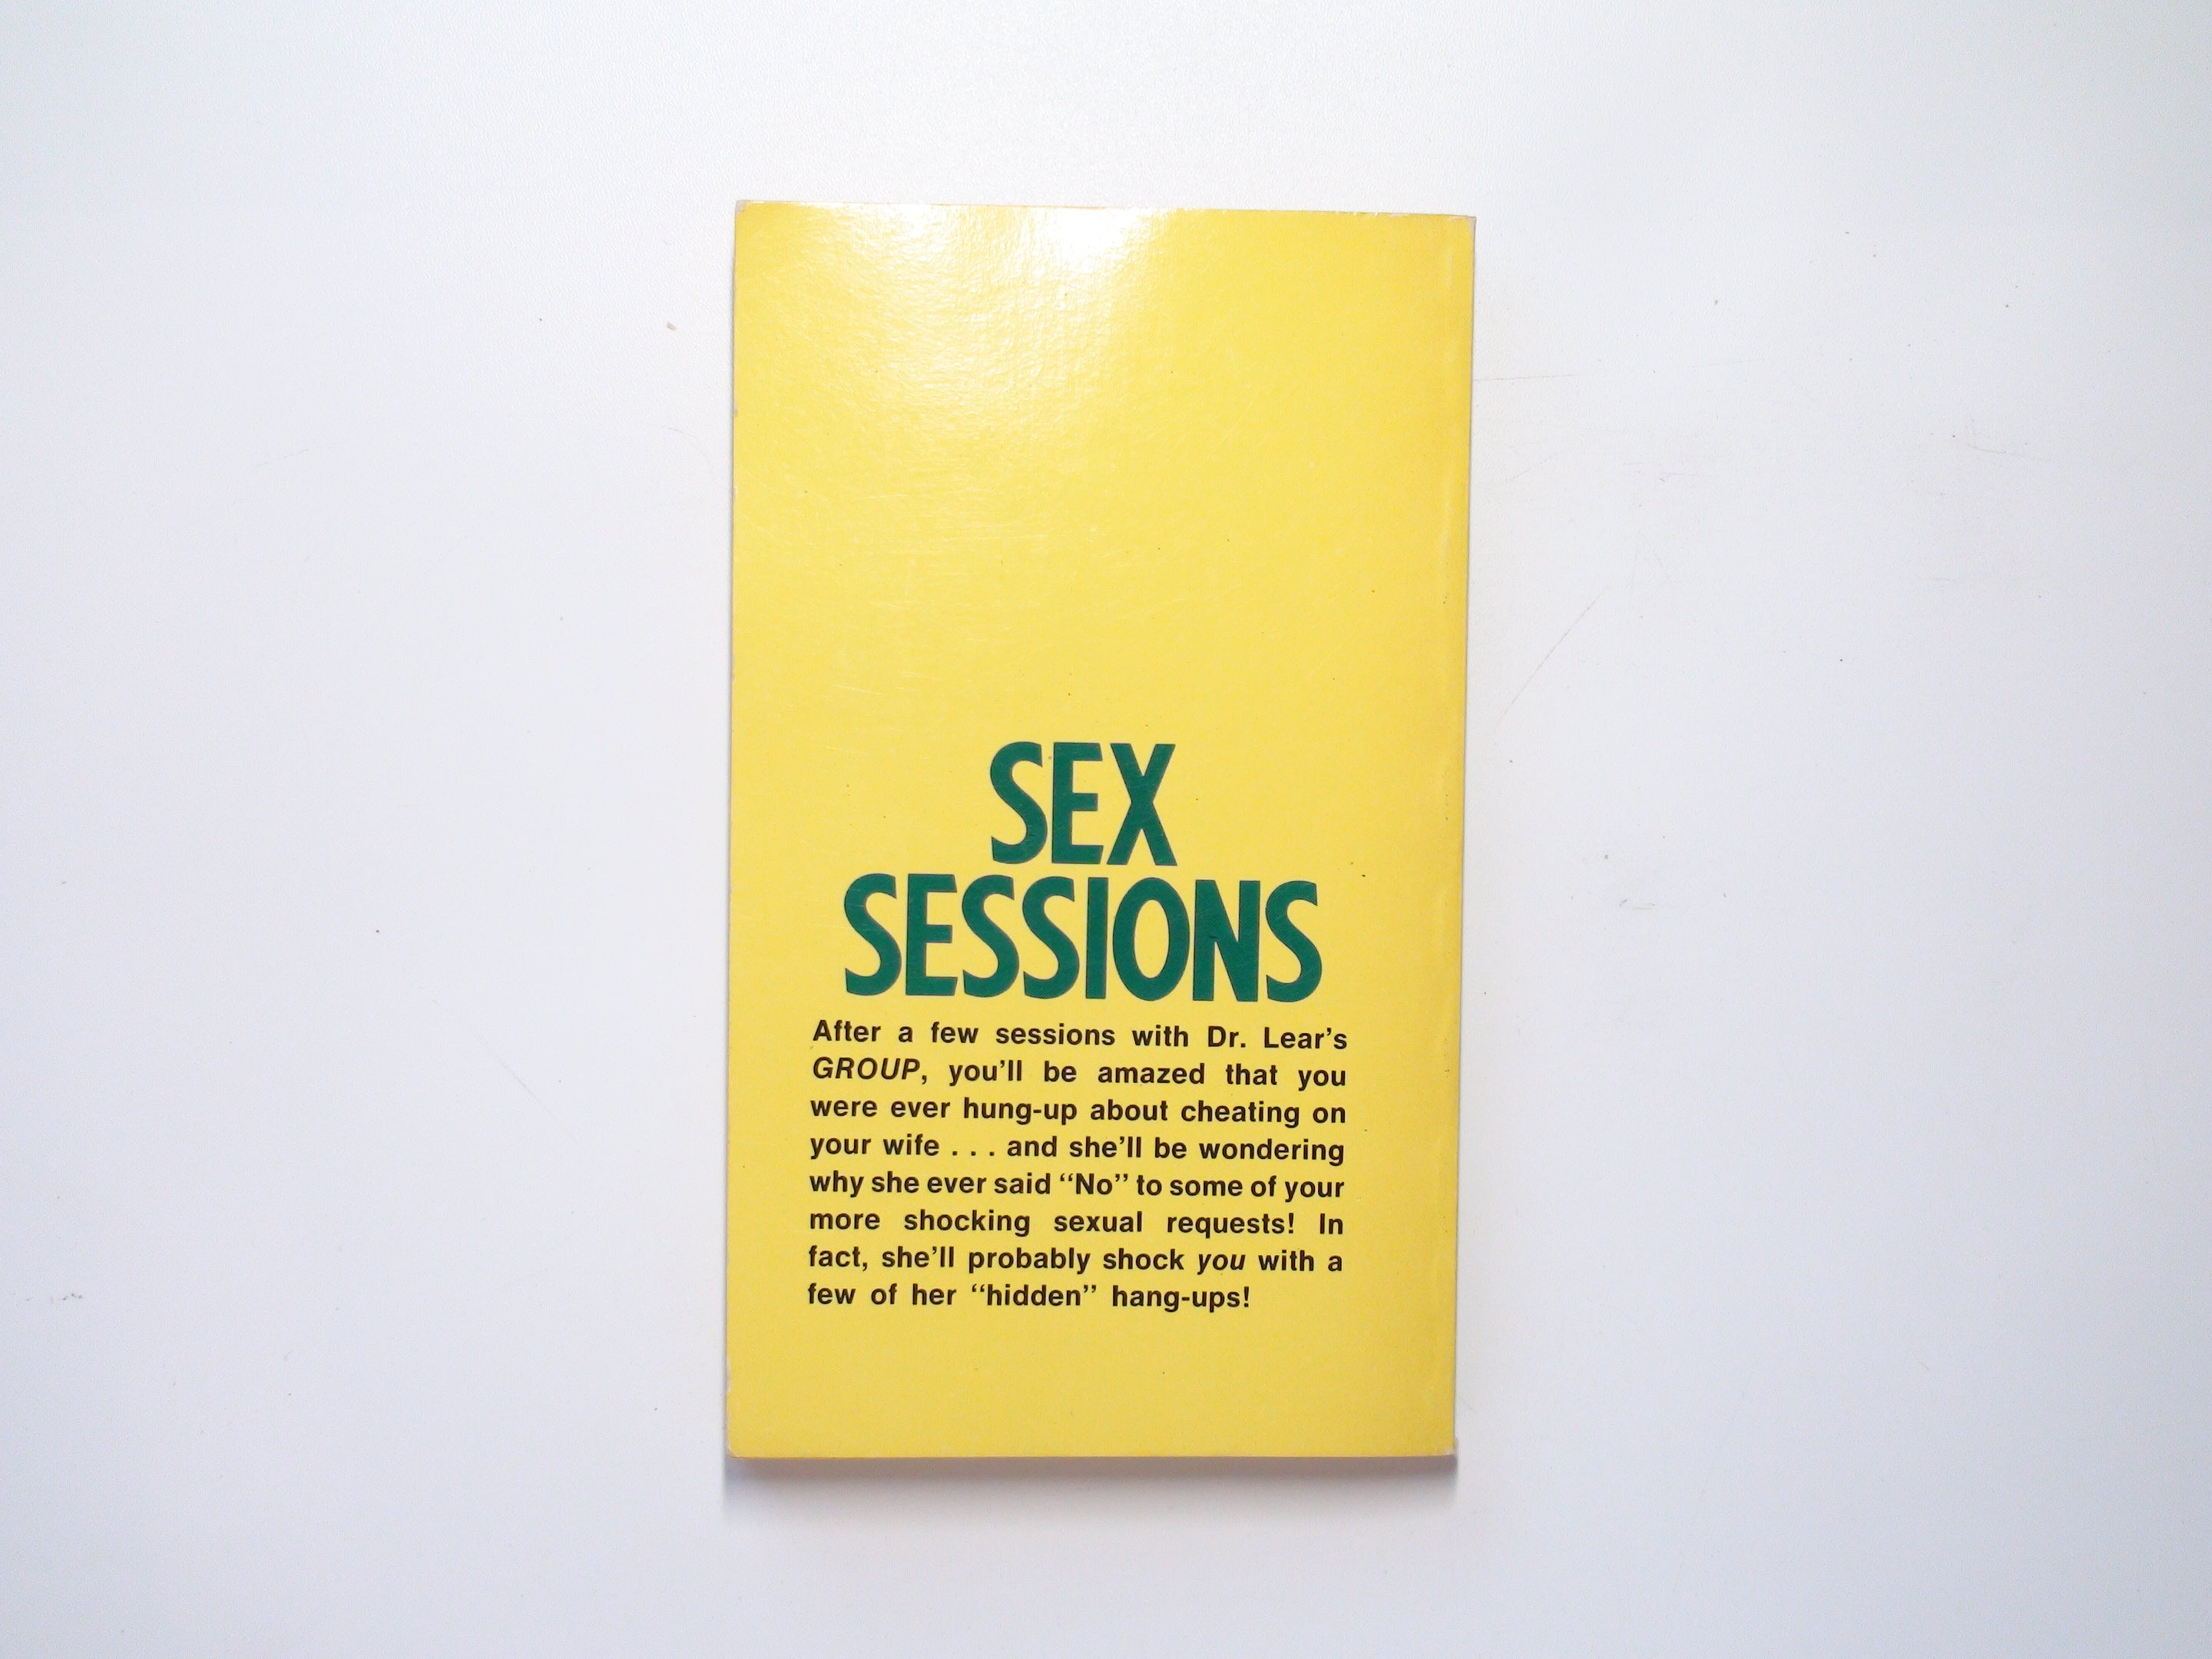 Kinky Scenes, by Brigette Breston, Bee Line Erotic Book, Paperback, 1977